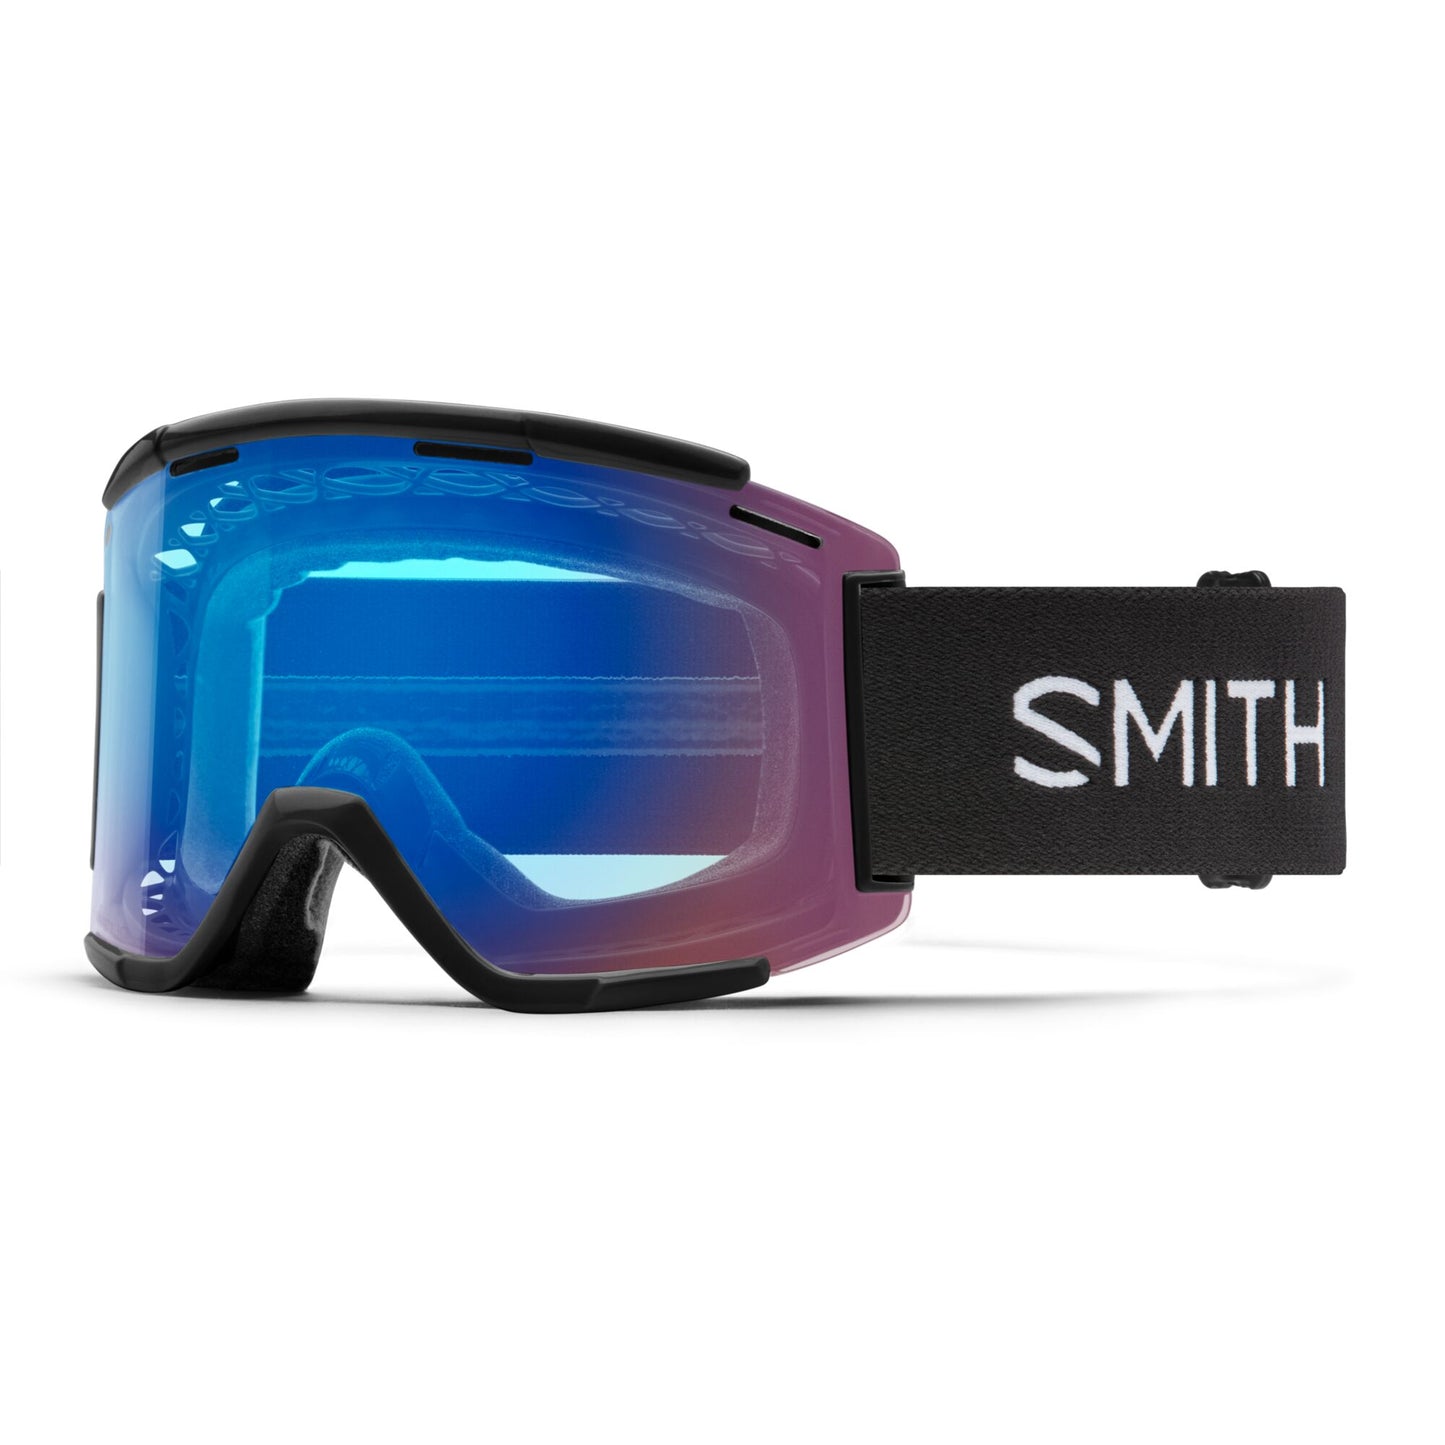 Smith Squad XL MTB Goggles - One Size Fits Most - Black - ChromaPop Contrast Rose Flash Lens